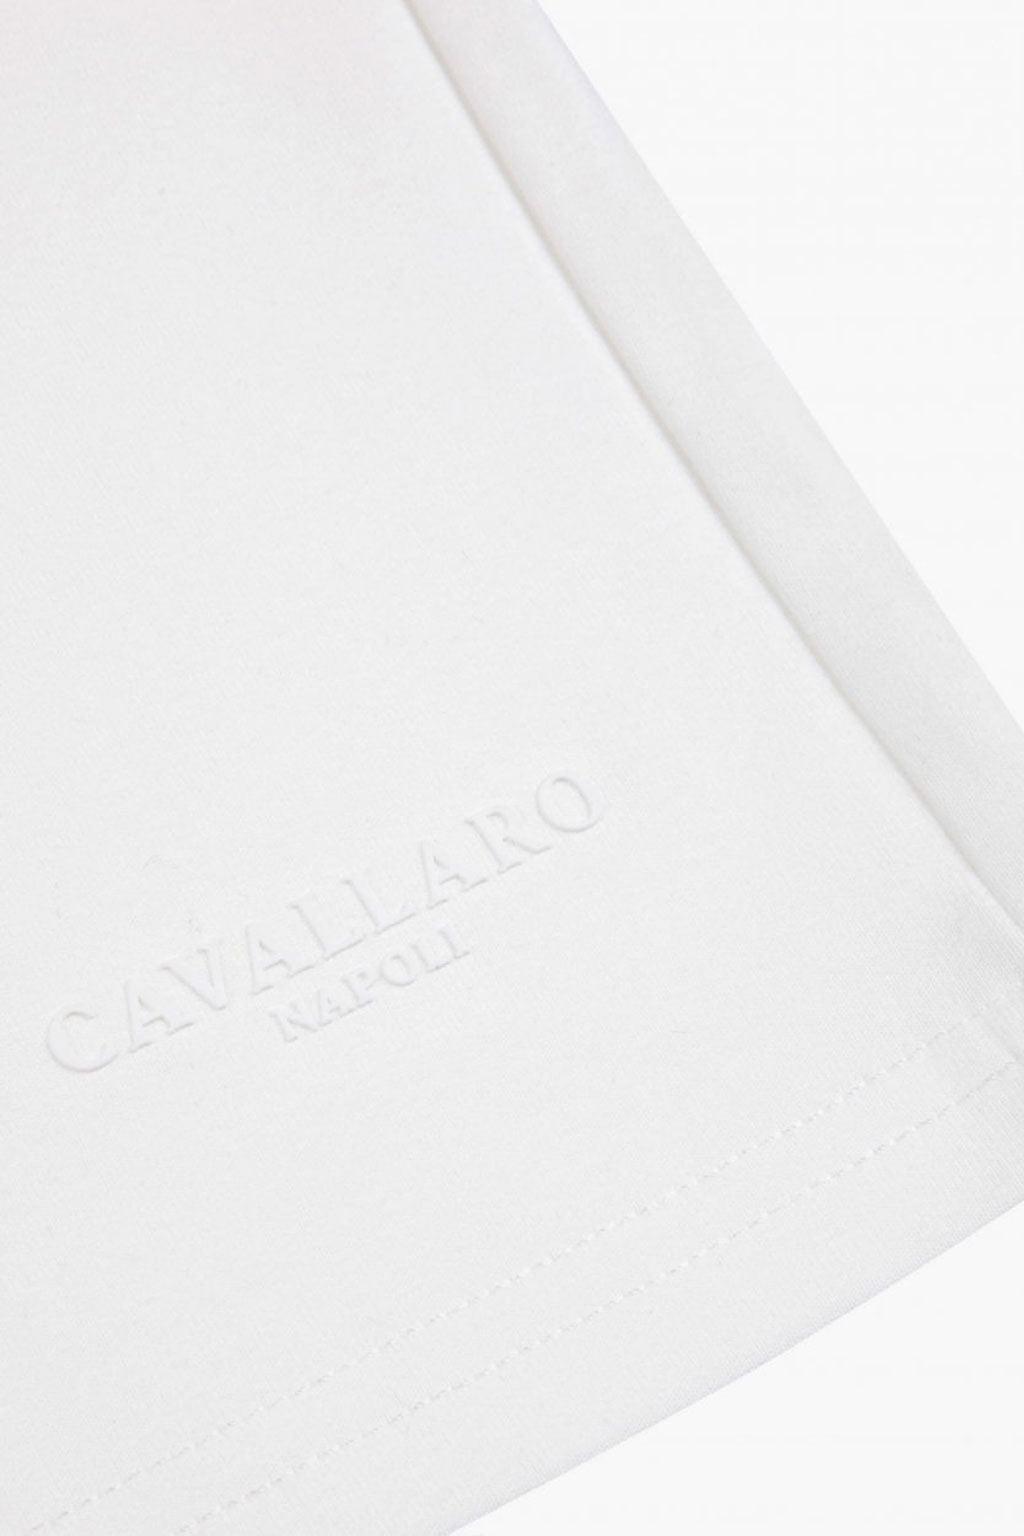 Cavallaro short - Big Boss | the menswear concept